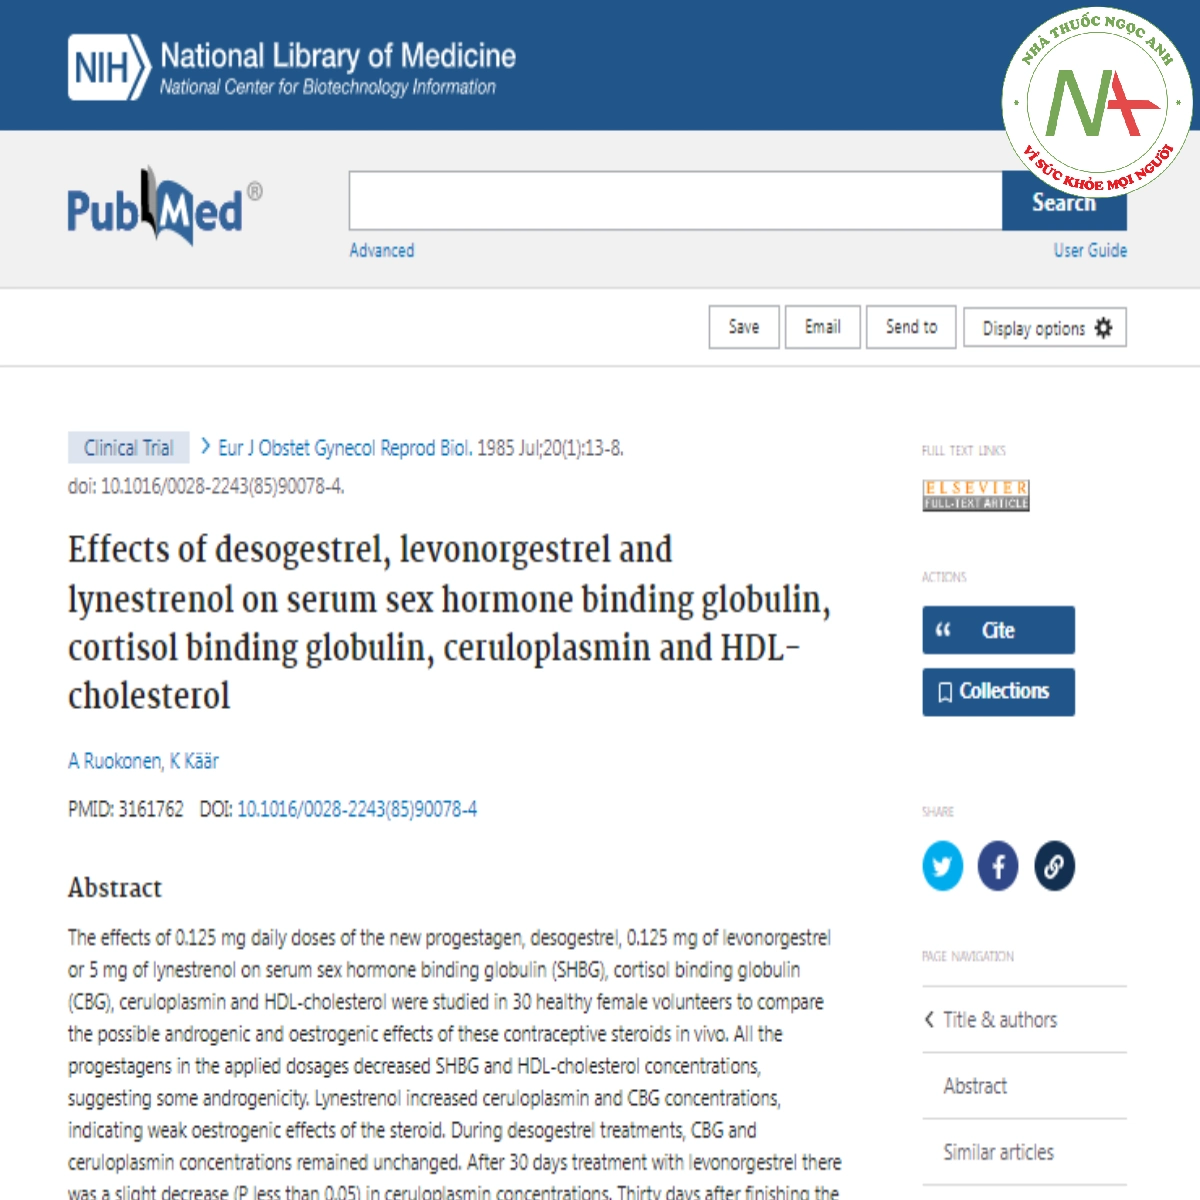 Effects of desogestrel, levonorgestrel and lynestrenol on serum sex hormone binding globulin, cortisol binding globulin, ceruloplasmin and HDL-cholesterol